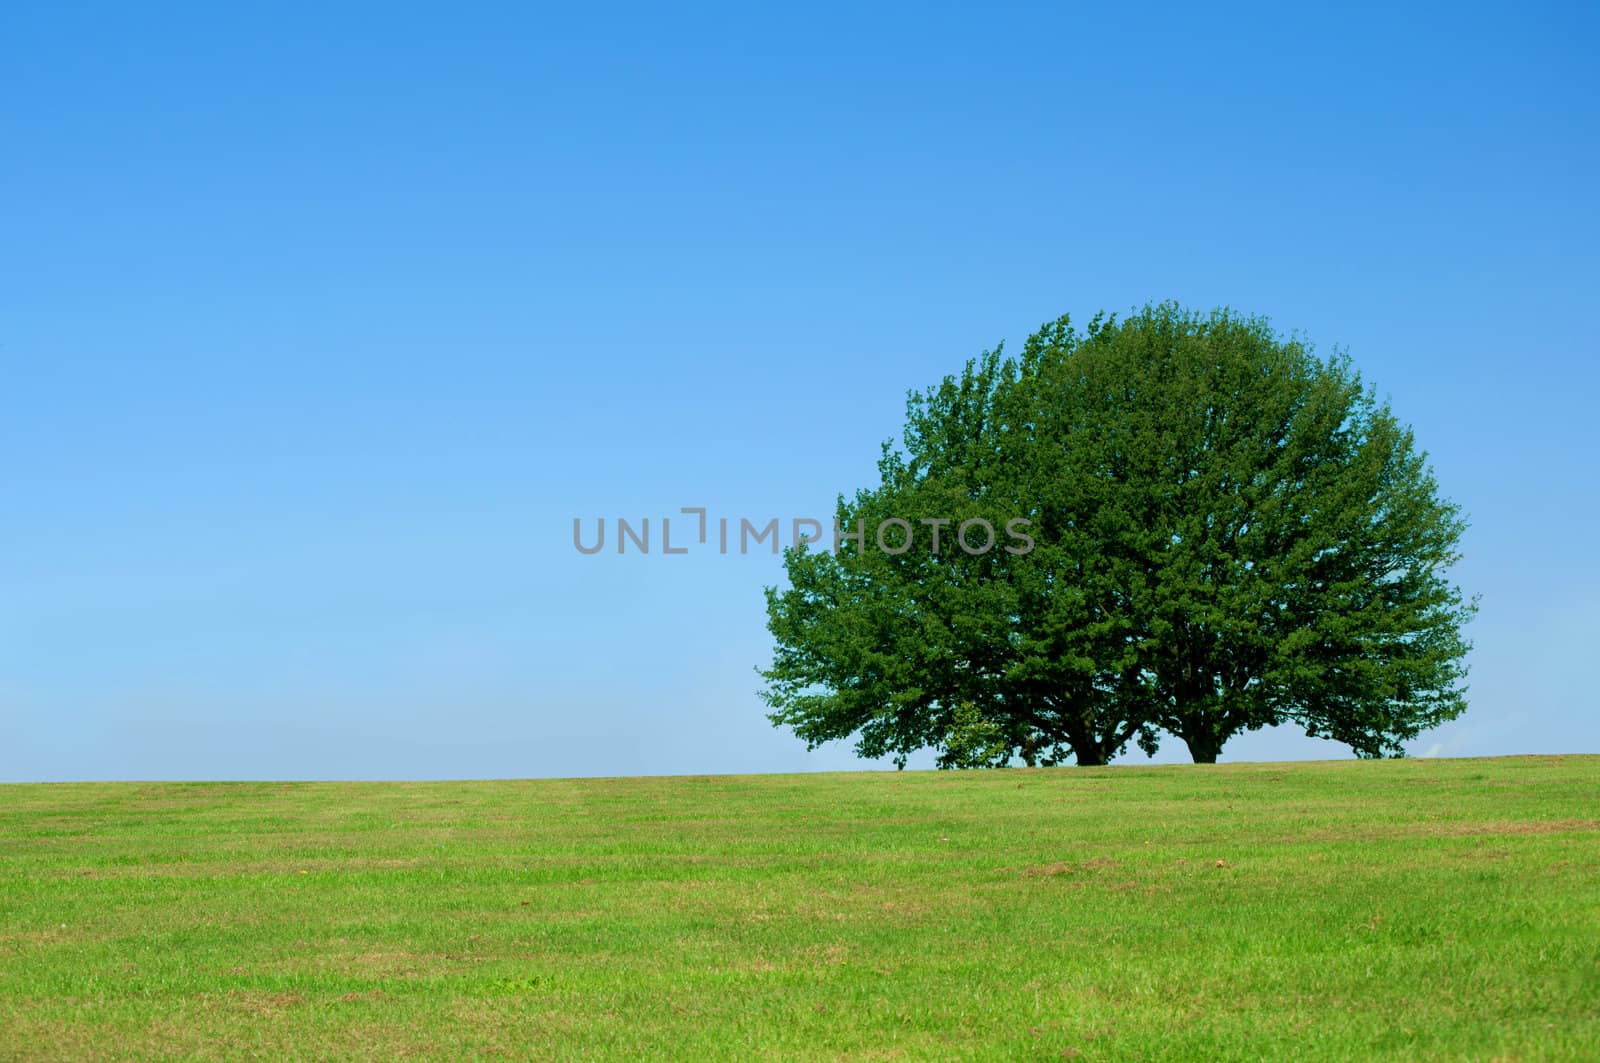 Single tree  by unikpix